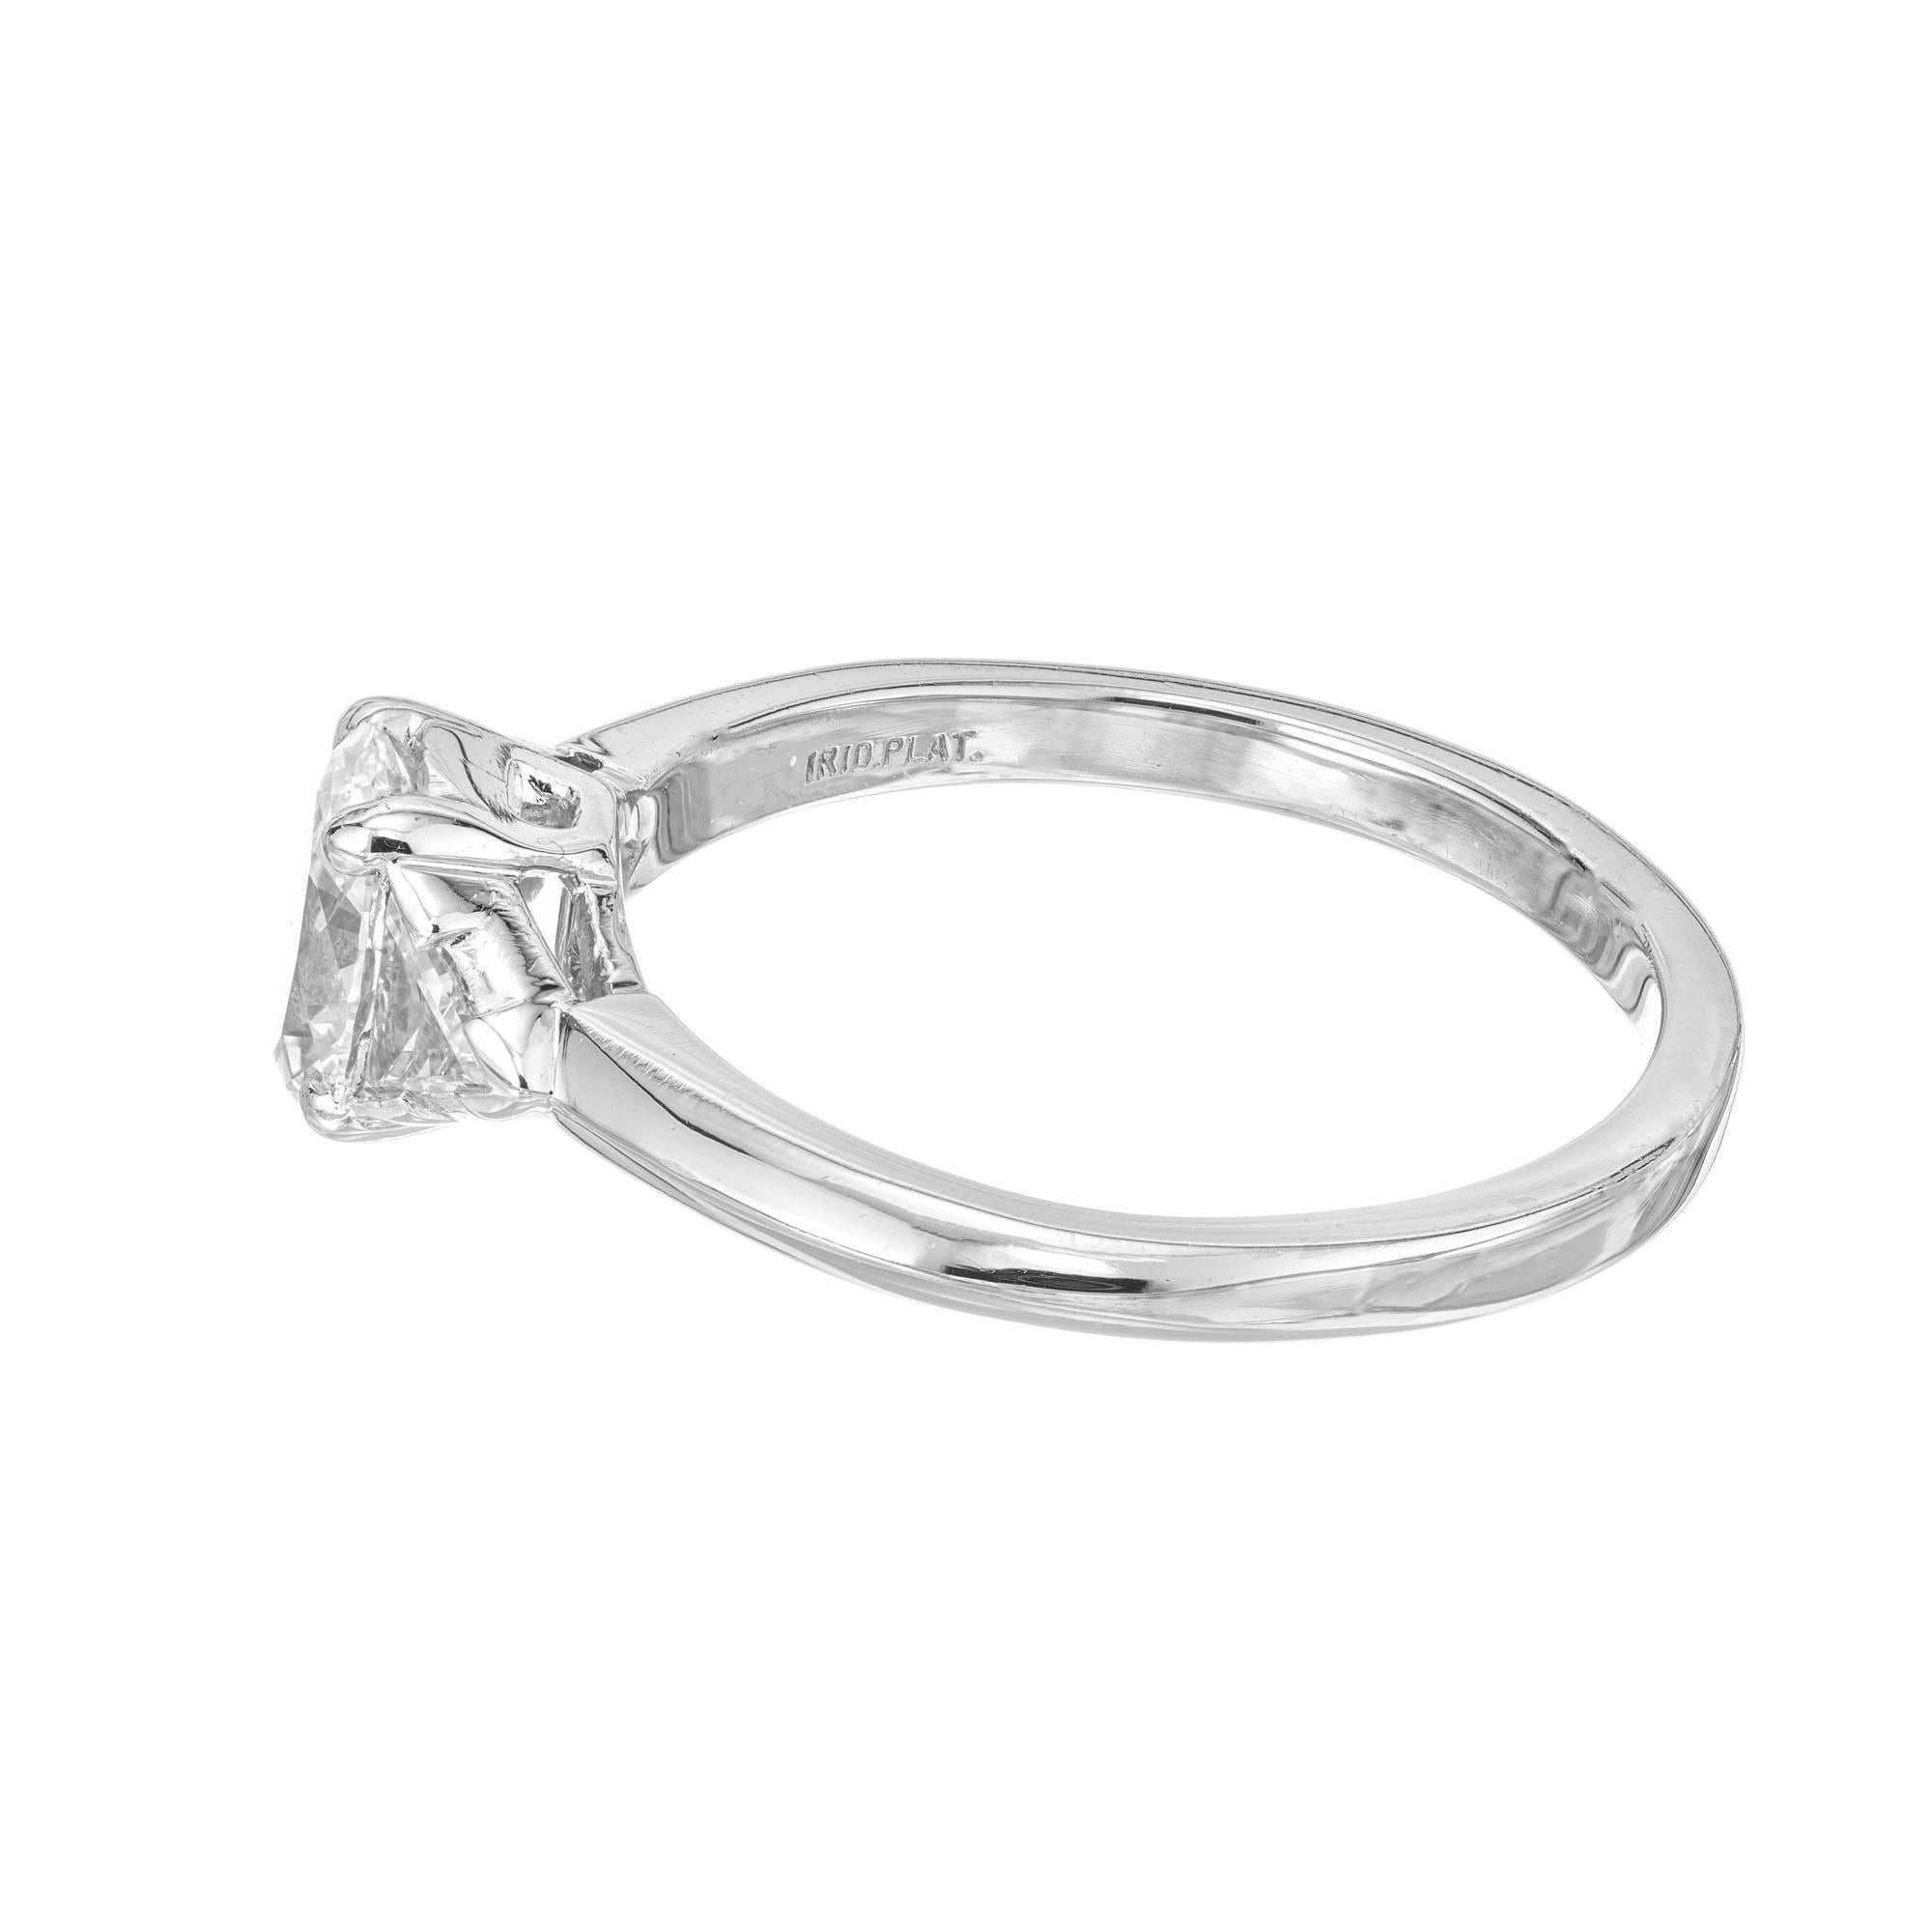 Tiffany & Co. GIA Certified .58 Carat Diamond Platinum Engagement Ring 1